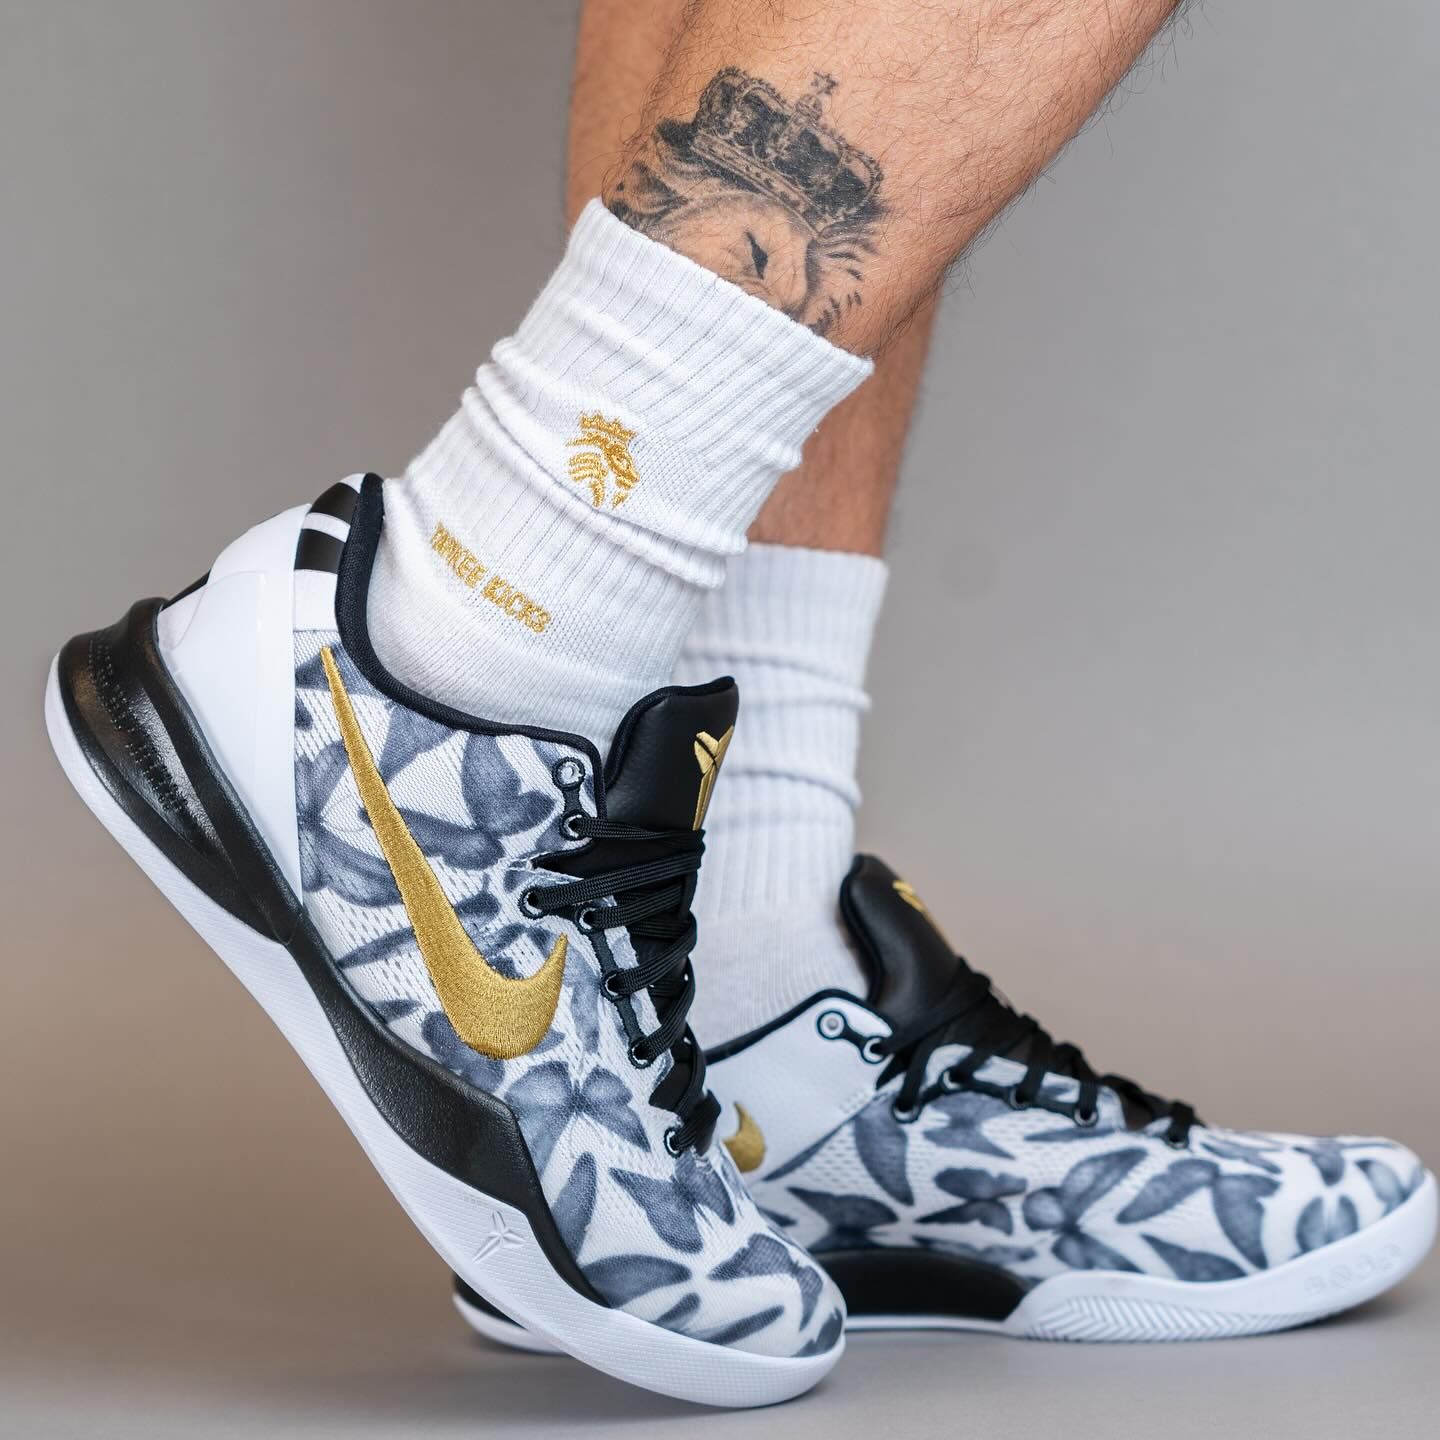 The cortez Nike Kobe 8 